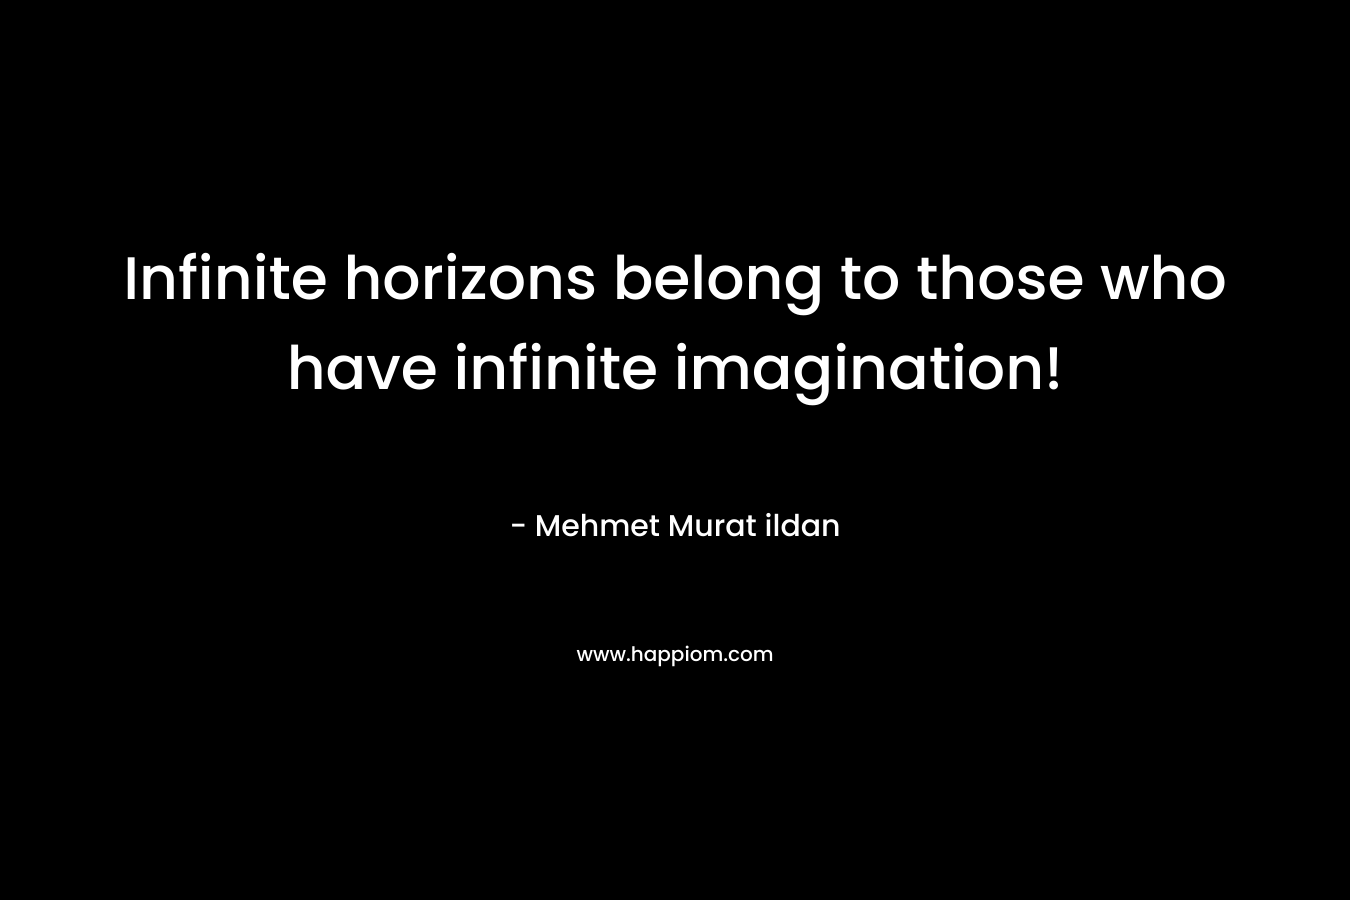 Infinite horizons belong to those who have infinite imagination!